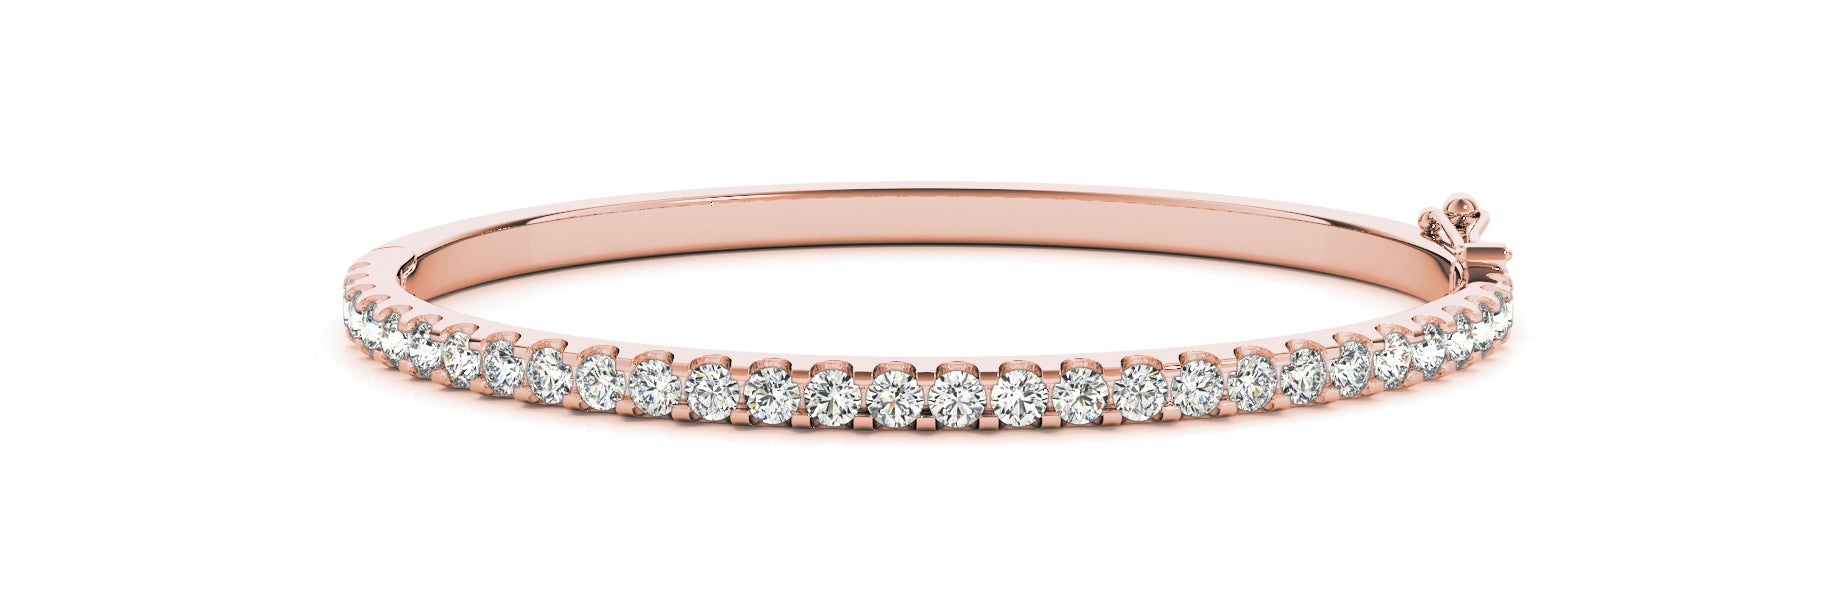 Diamond Bangle Bracelet Round Shaped 4 Carat in 14K & 18K Rose Gold Front View